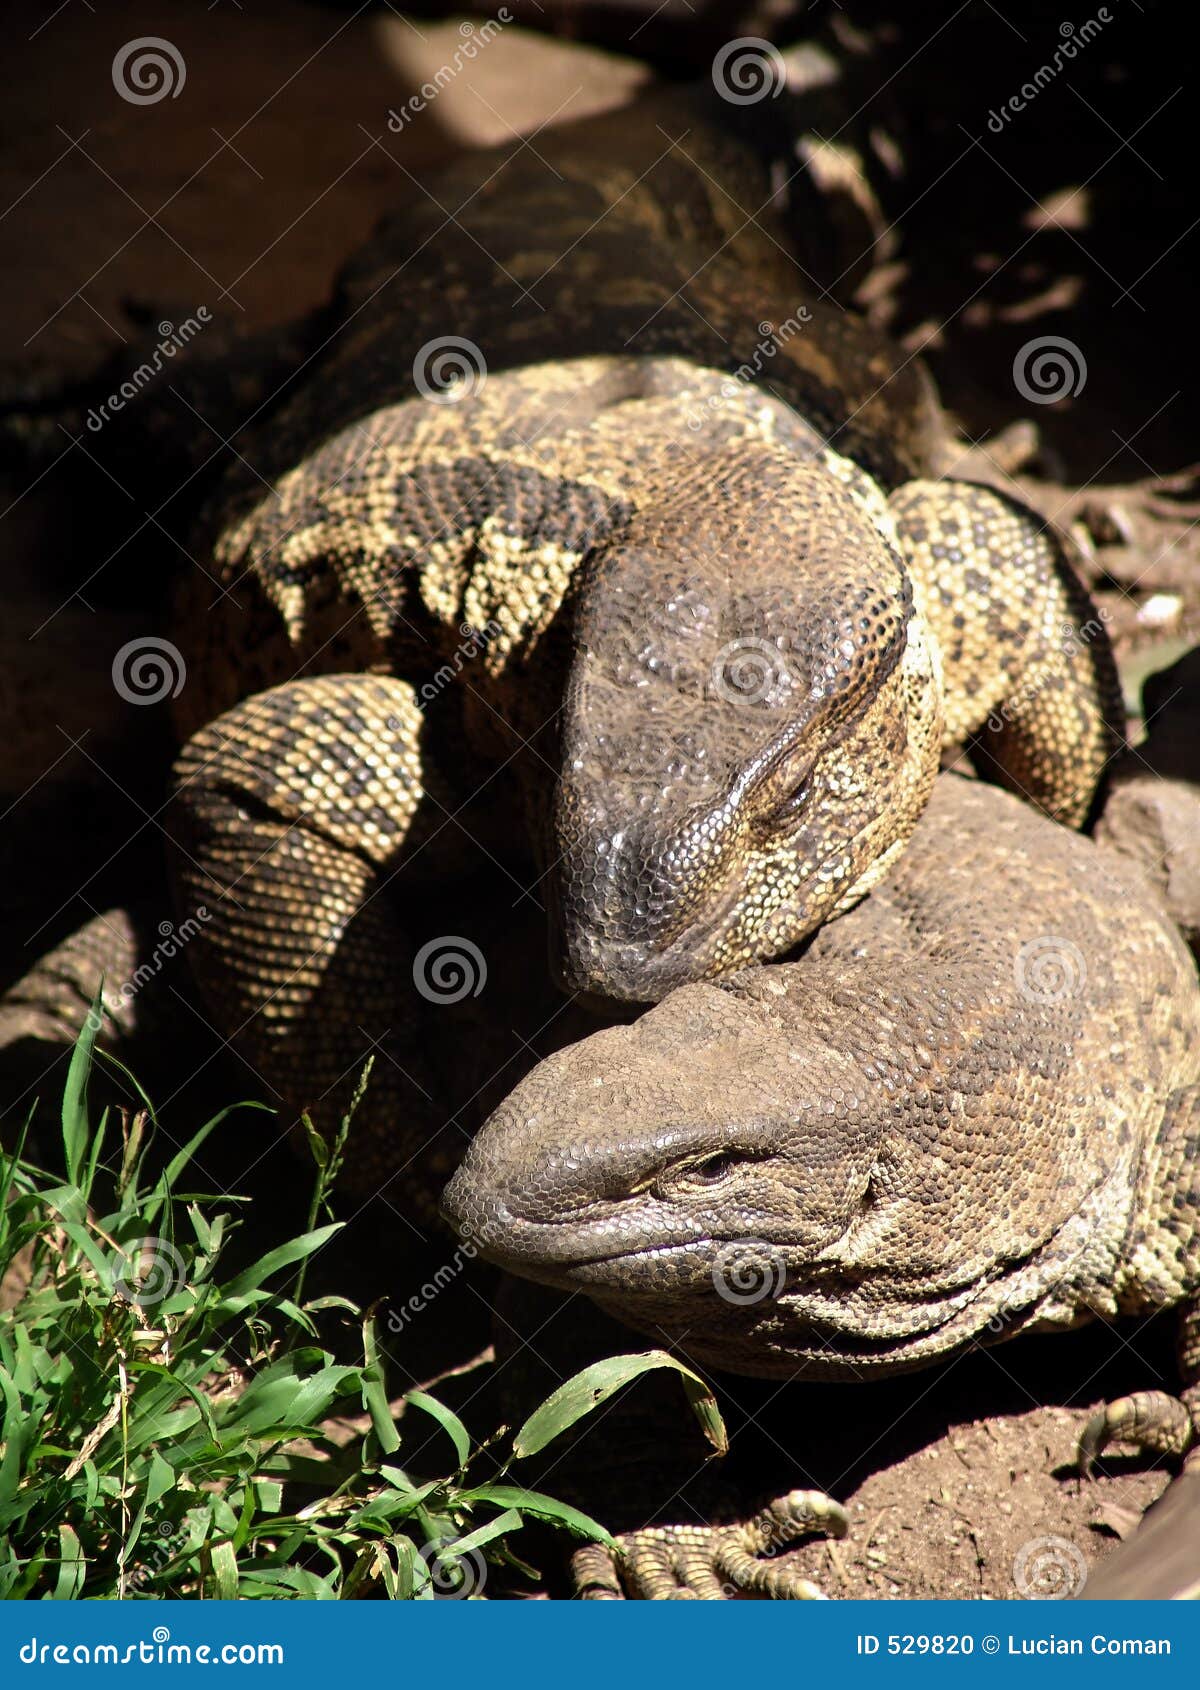 lizards sunning on rock